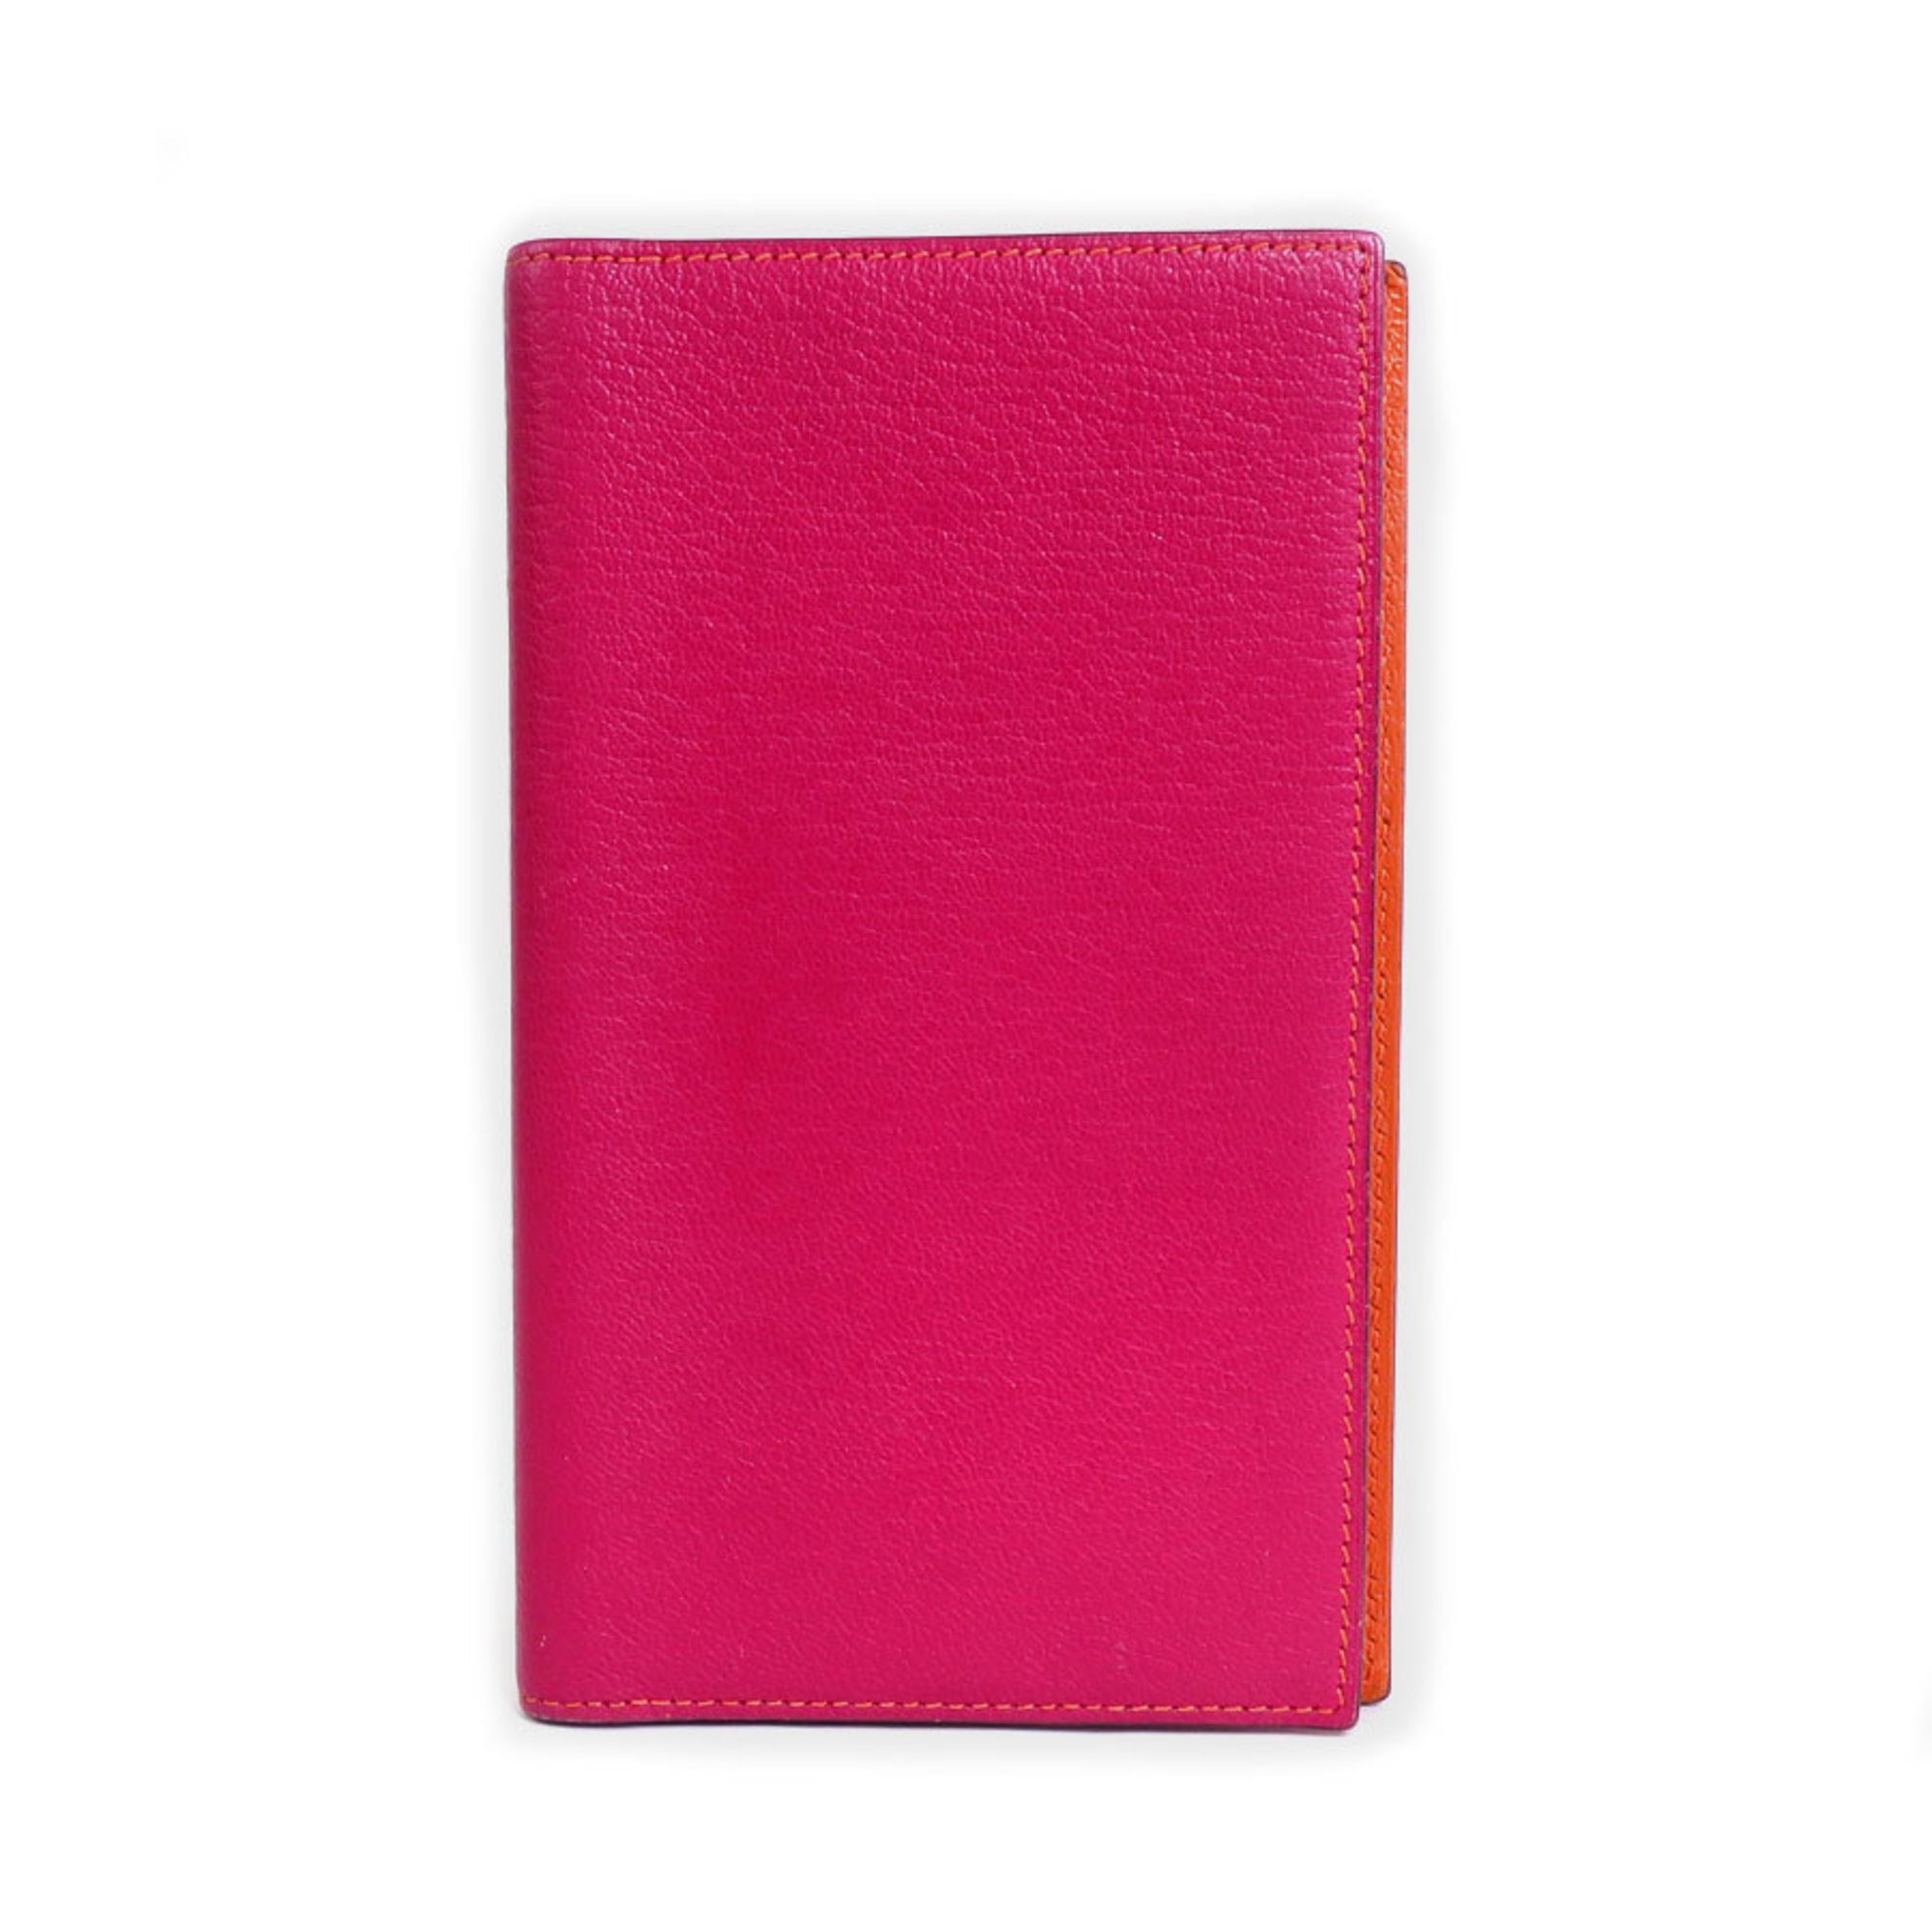 Hermes Notebook Cover Leather Magenta/Orange Unisex